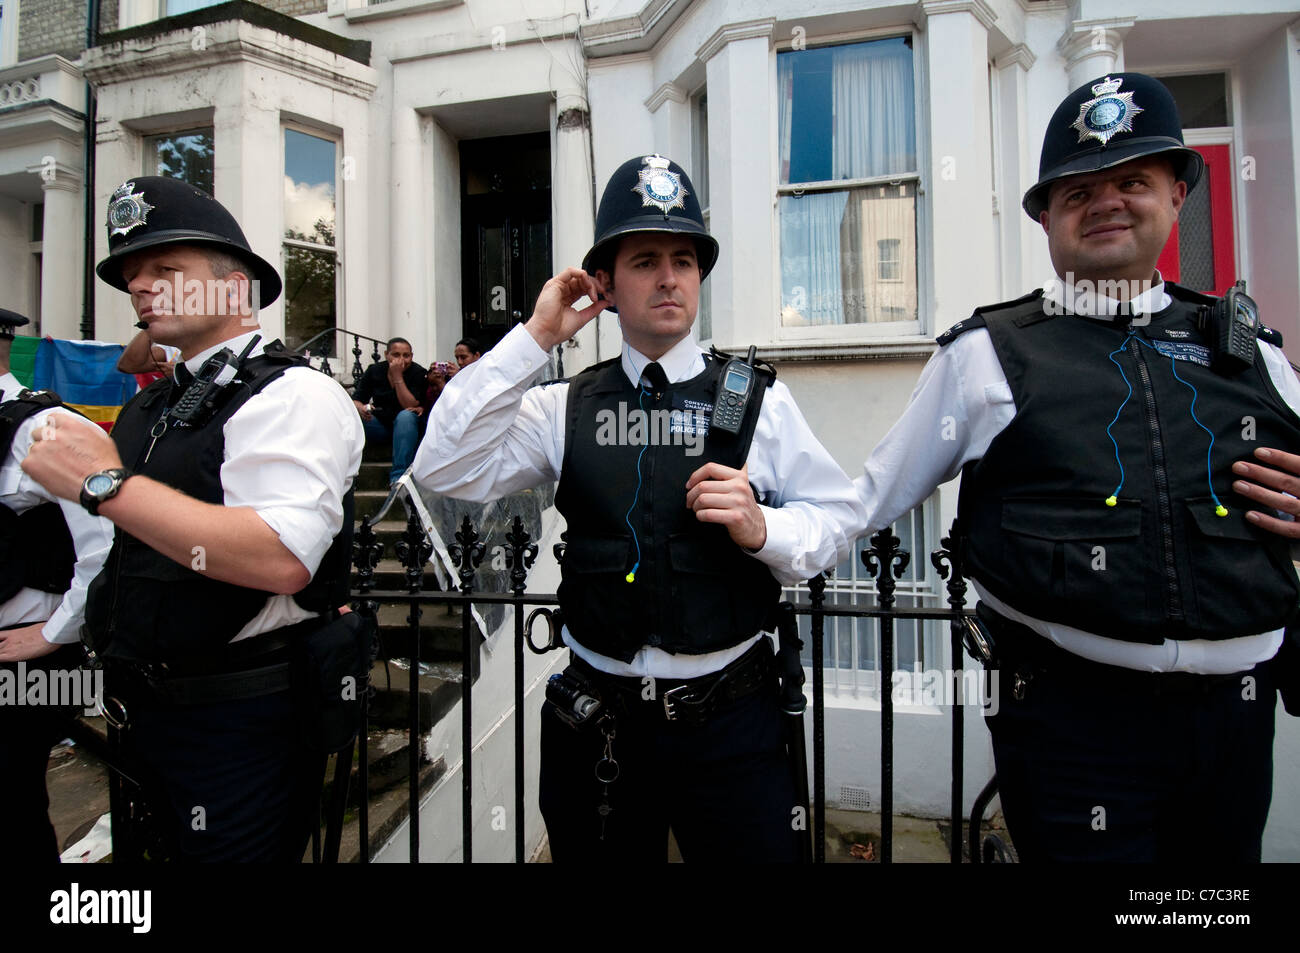 Chodidlo erotický Zataženo anglická policejní přilba bobbies Zeměpis George  Hanbury sklenka